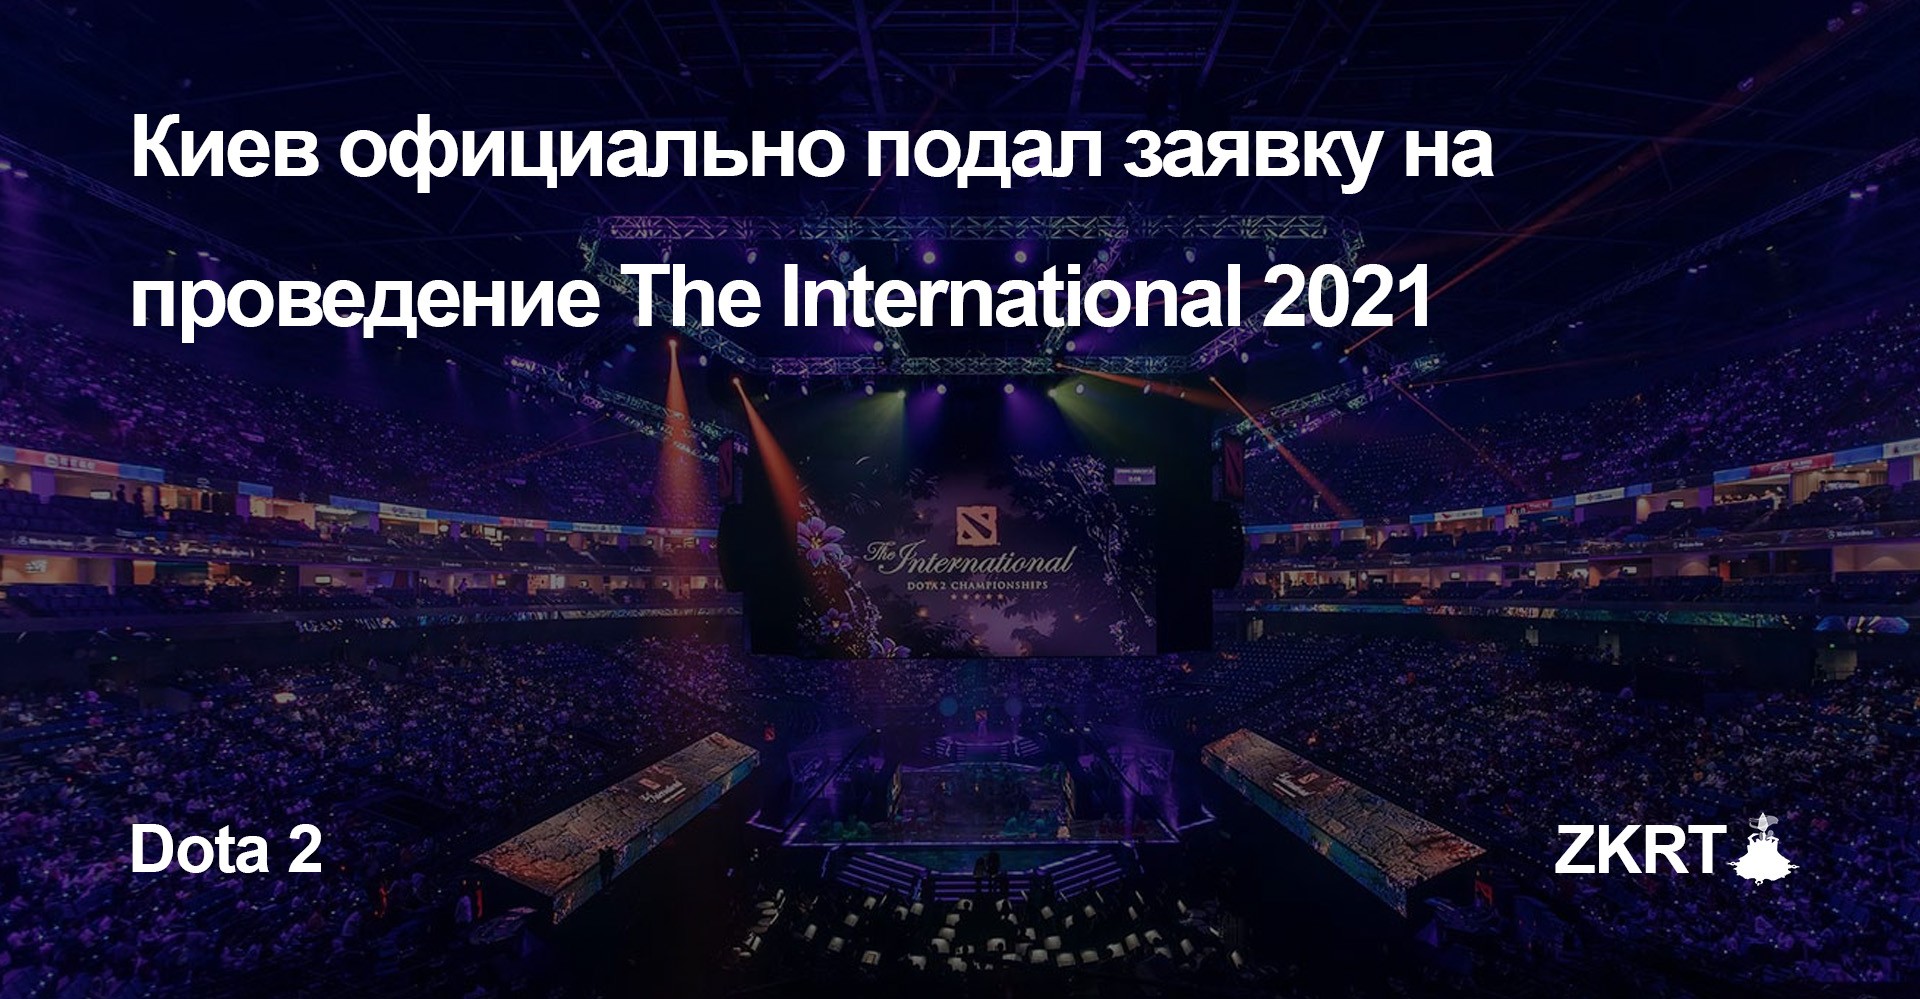 The International 2021